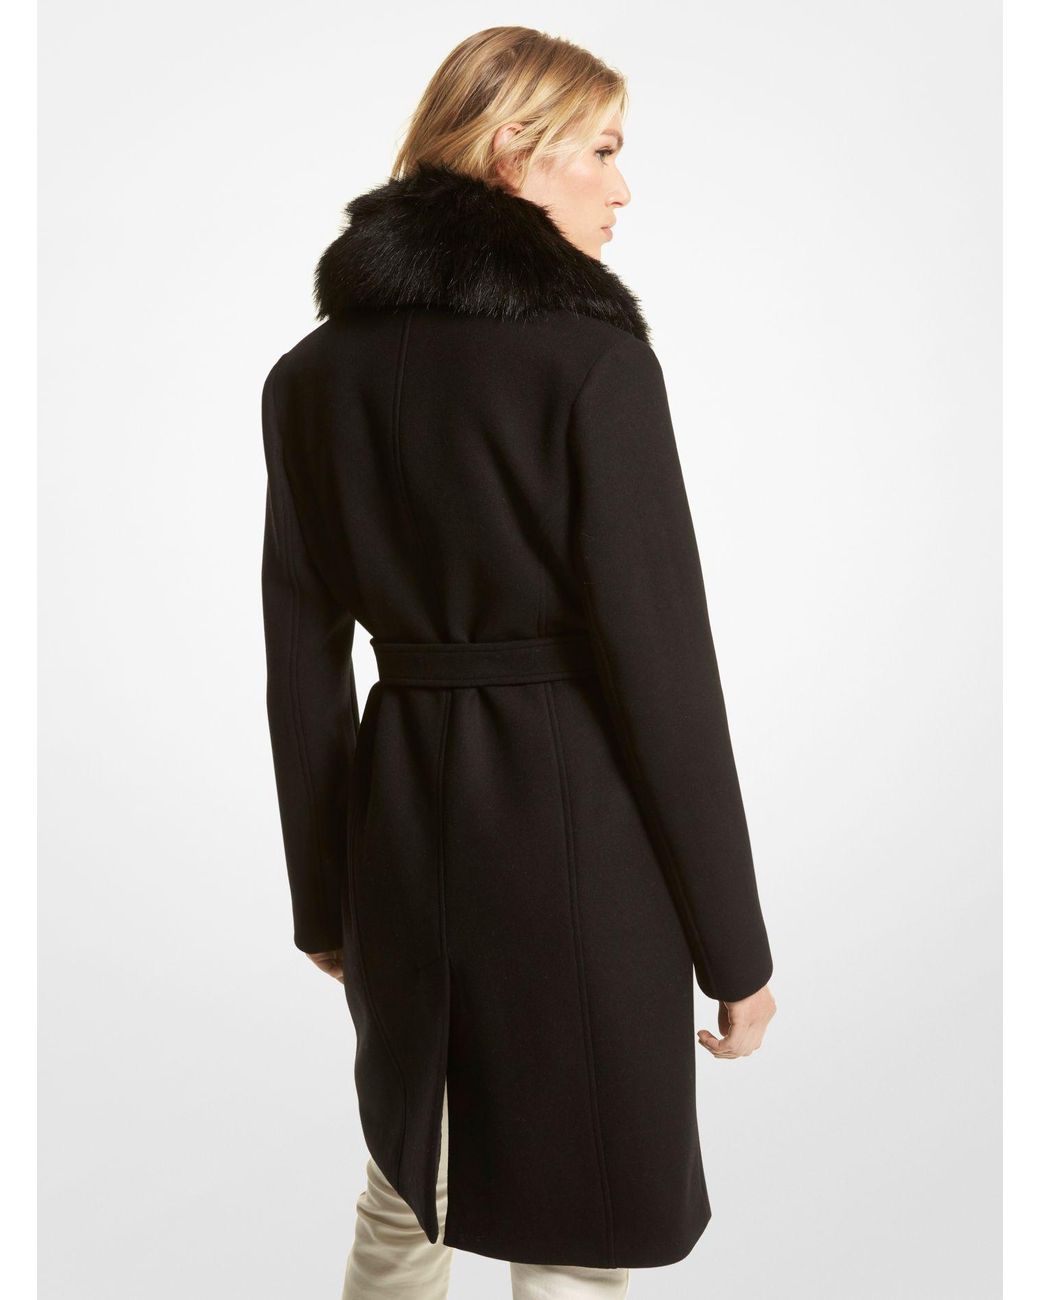 Michael Kors Faux Fur-collar Wool Blend Coat in Black | Lyst